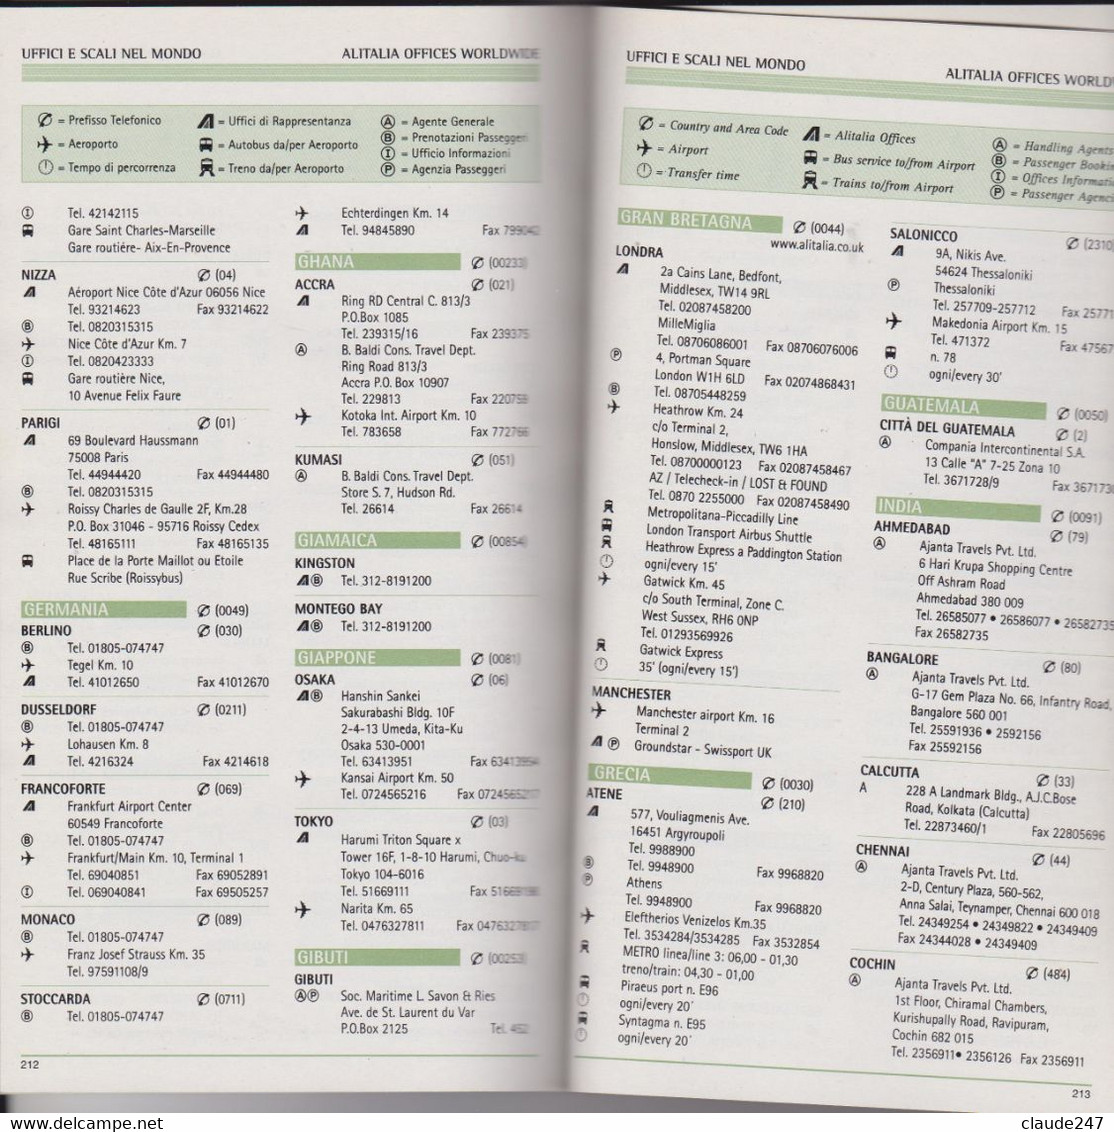 Alitalia Easy Timetable - Orario Generale Periodo Oct 31 2004 26 Mar 2005 - Timetables